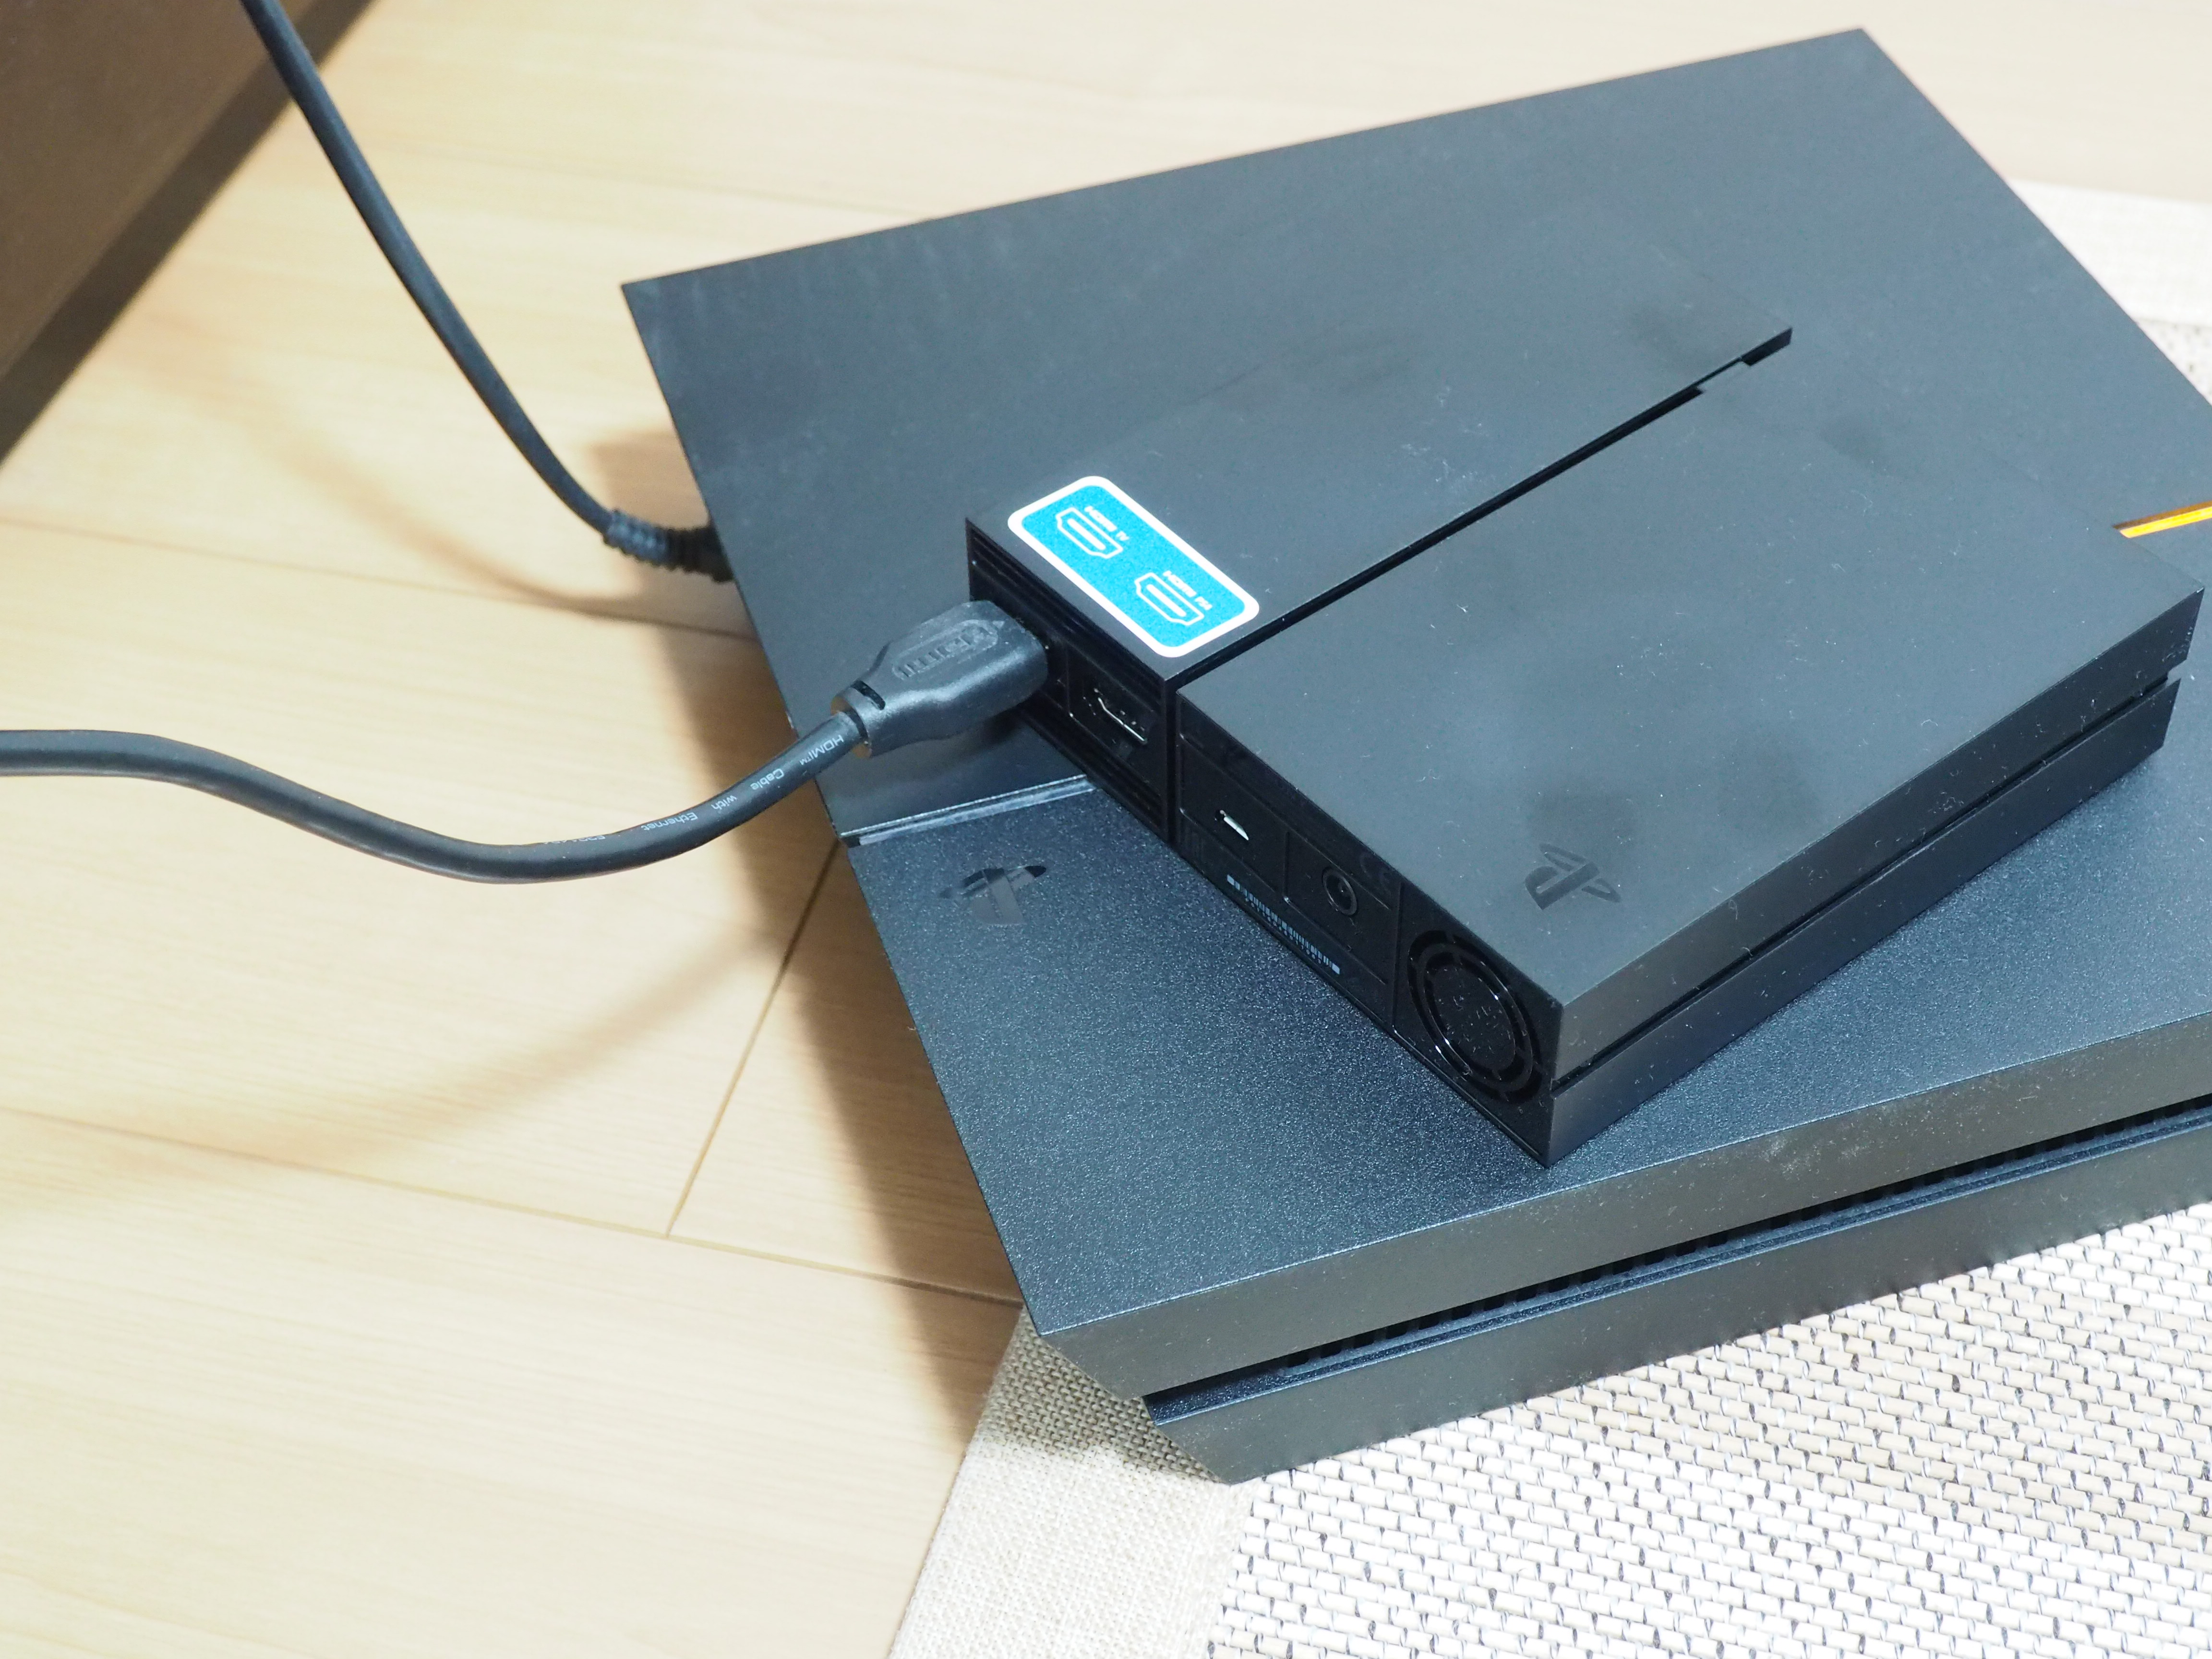 Playstation Vr開梱の儀 家庭用ゲーム機ならではの簡易なセットアップ ケーブル取り回しには一工夫必要 Engadget 日本版